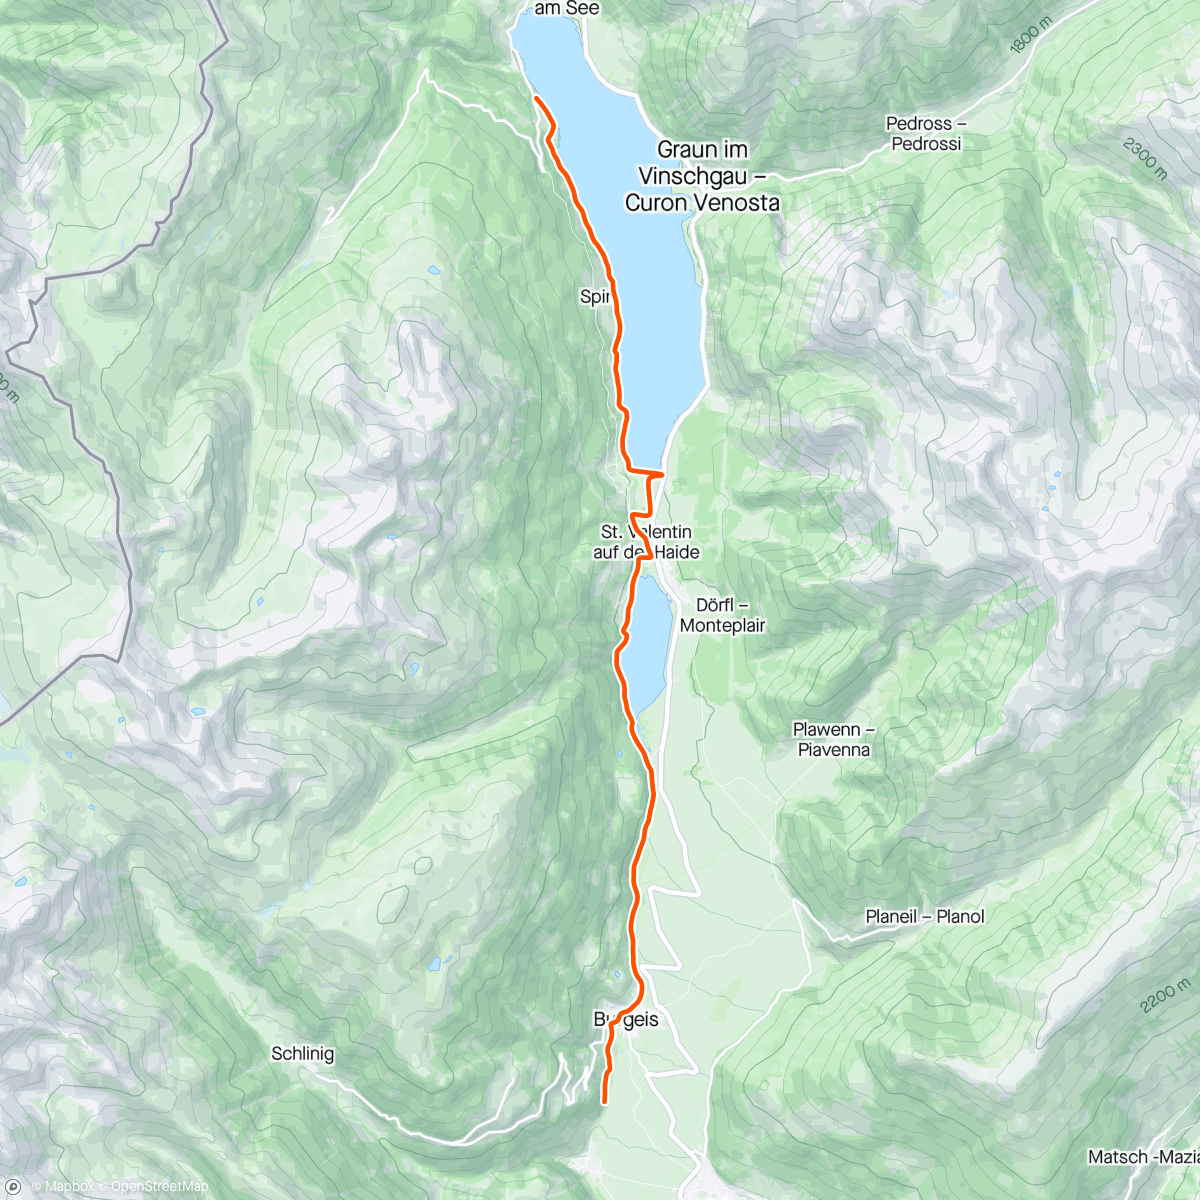 Mapa da atividade, Kinomap - 30 minute Ultimate Indoor Cycling Workout Alps South Tyrol Lake Tour 2020 Garmin Ultra HD Video